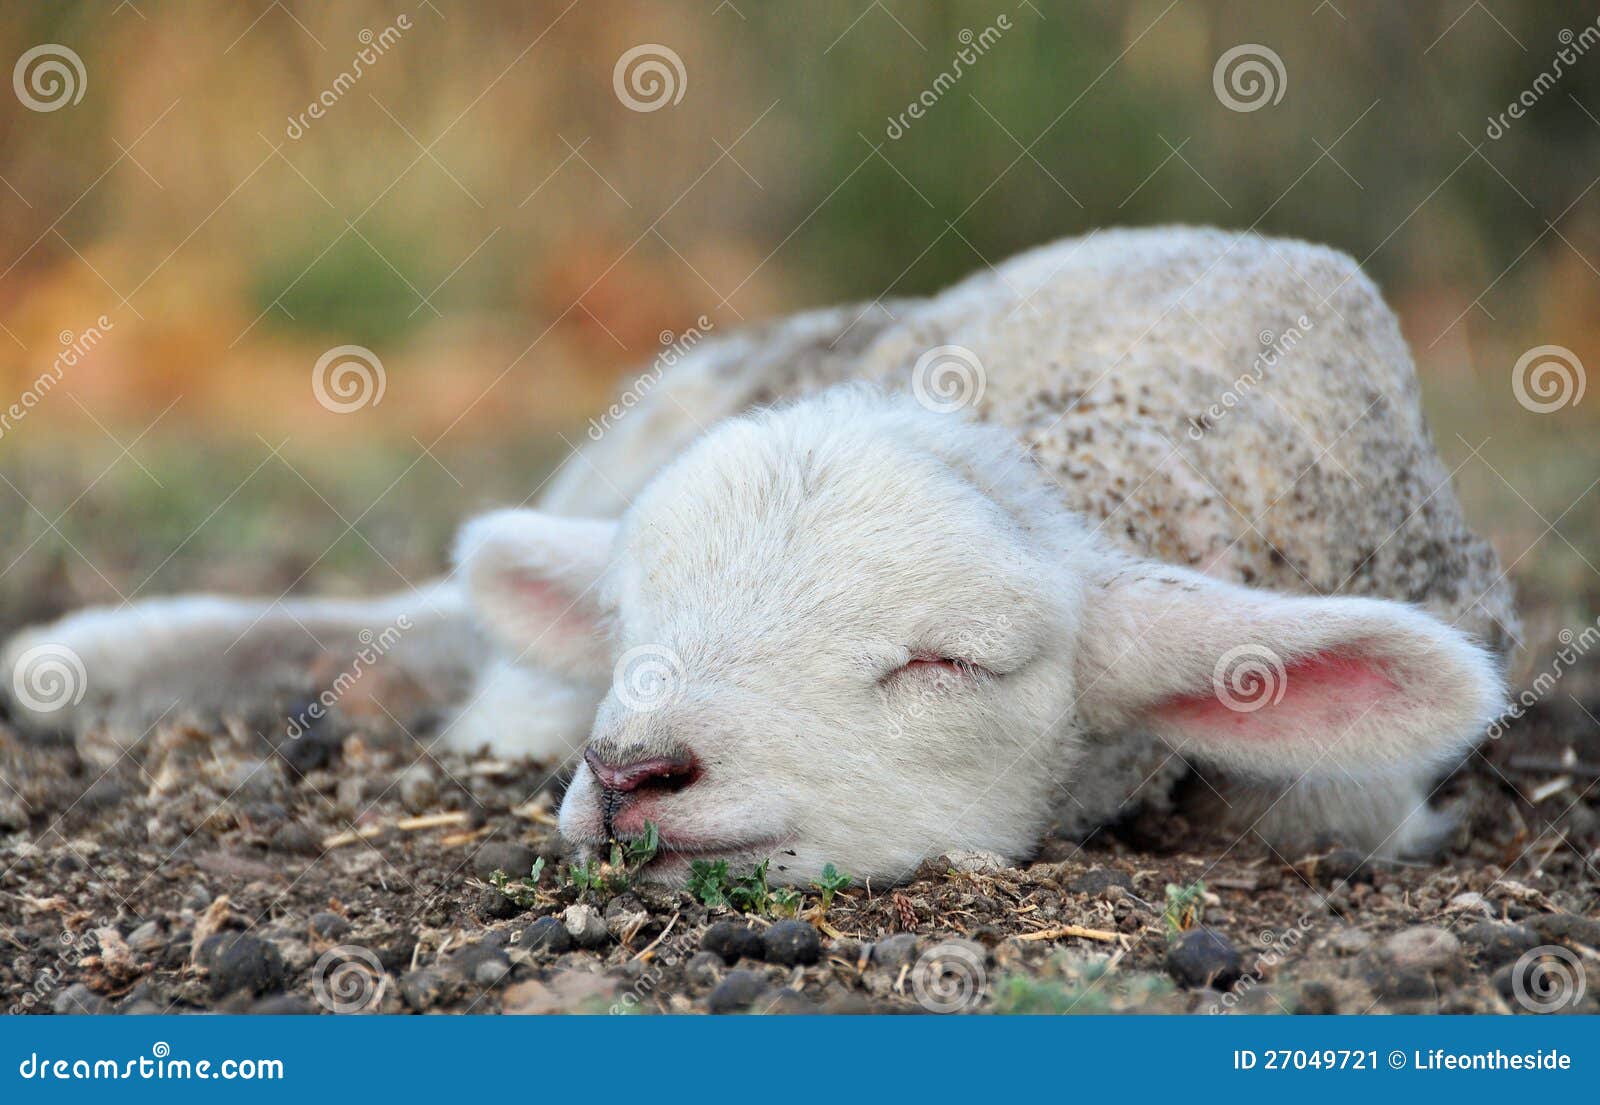 the cutest newborn spring lamb ever!